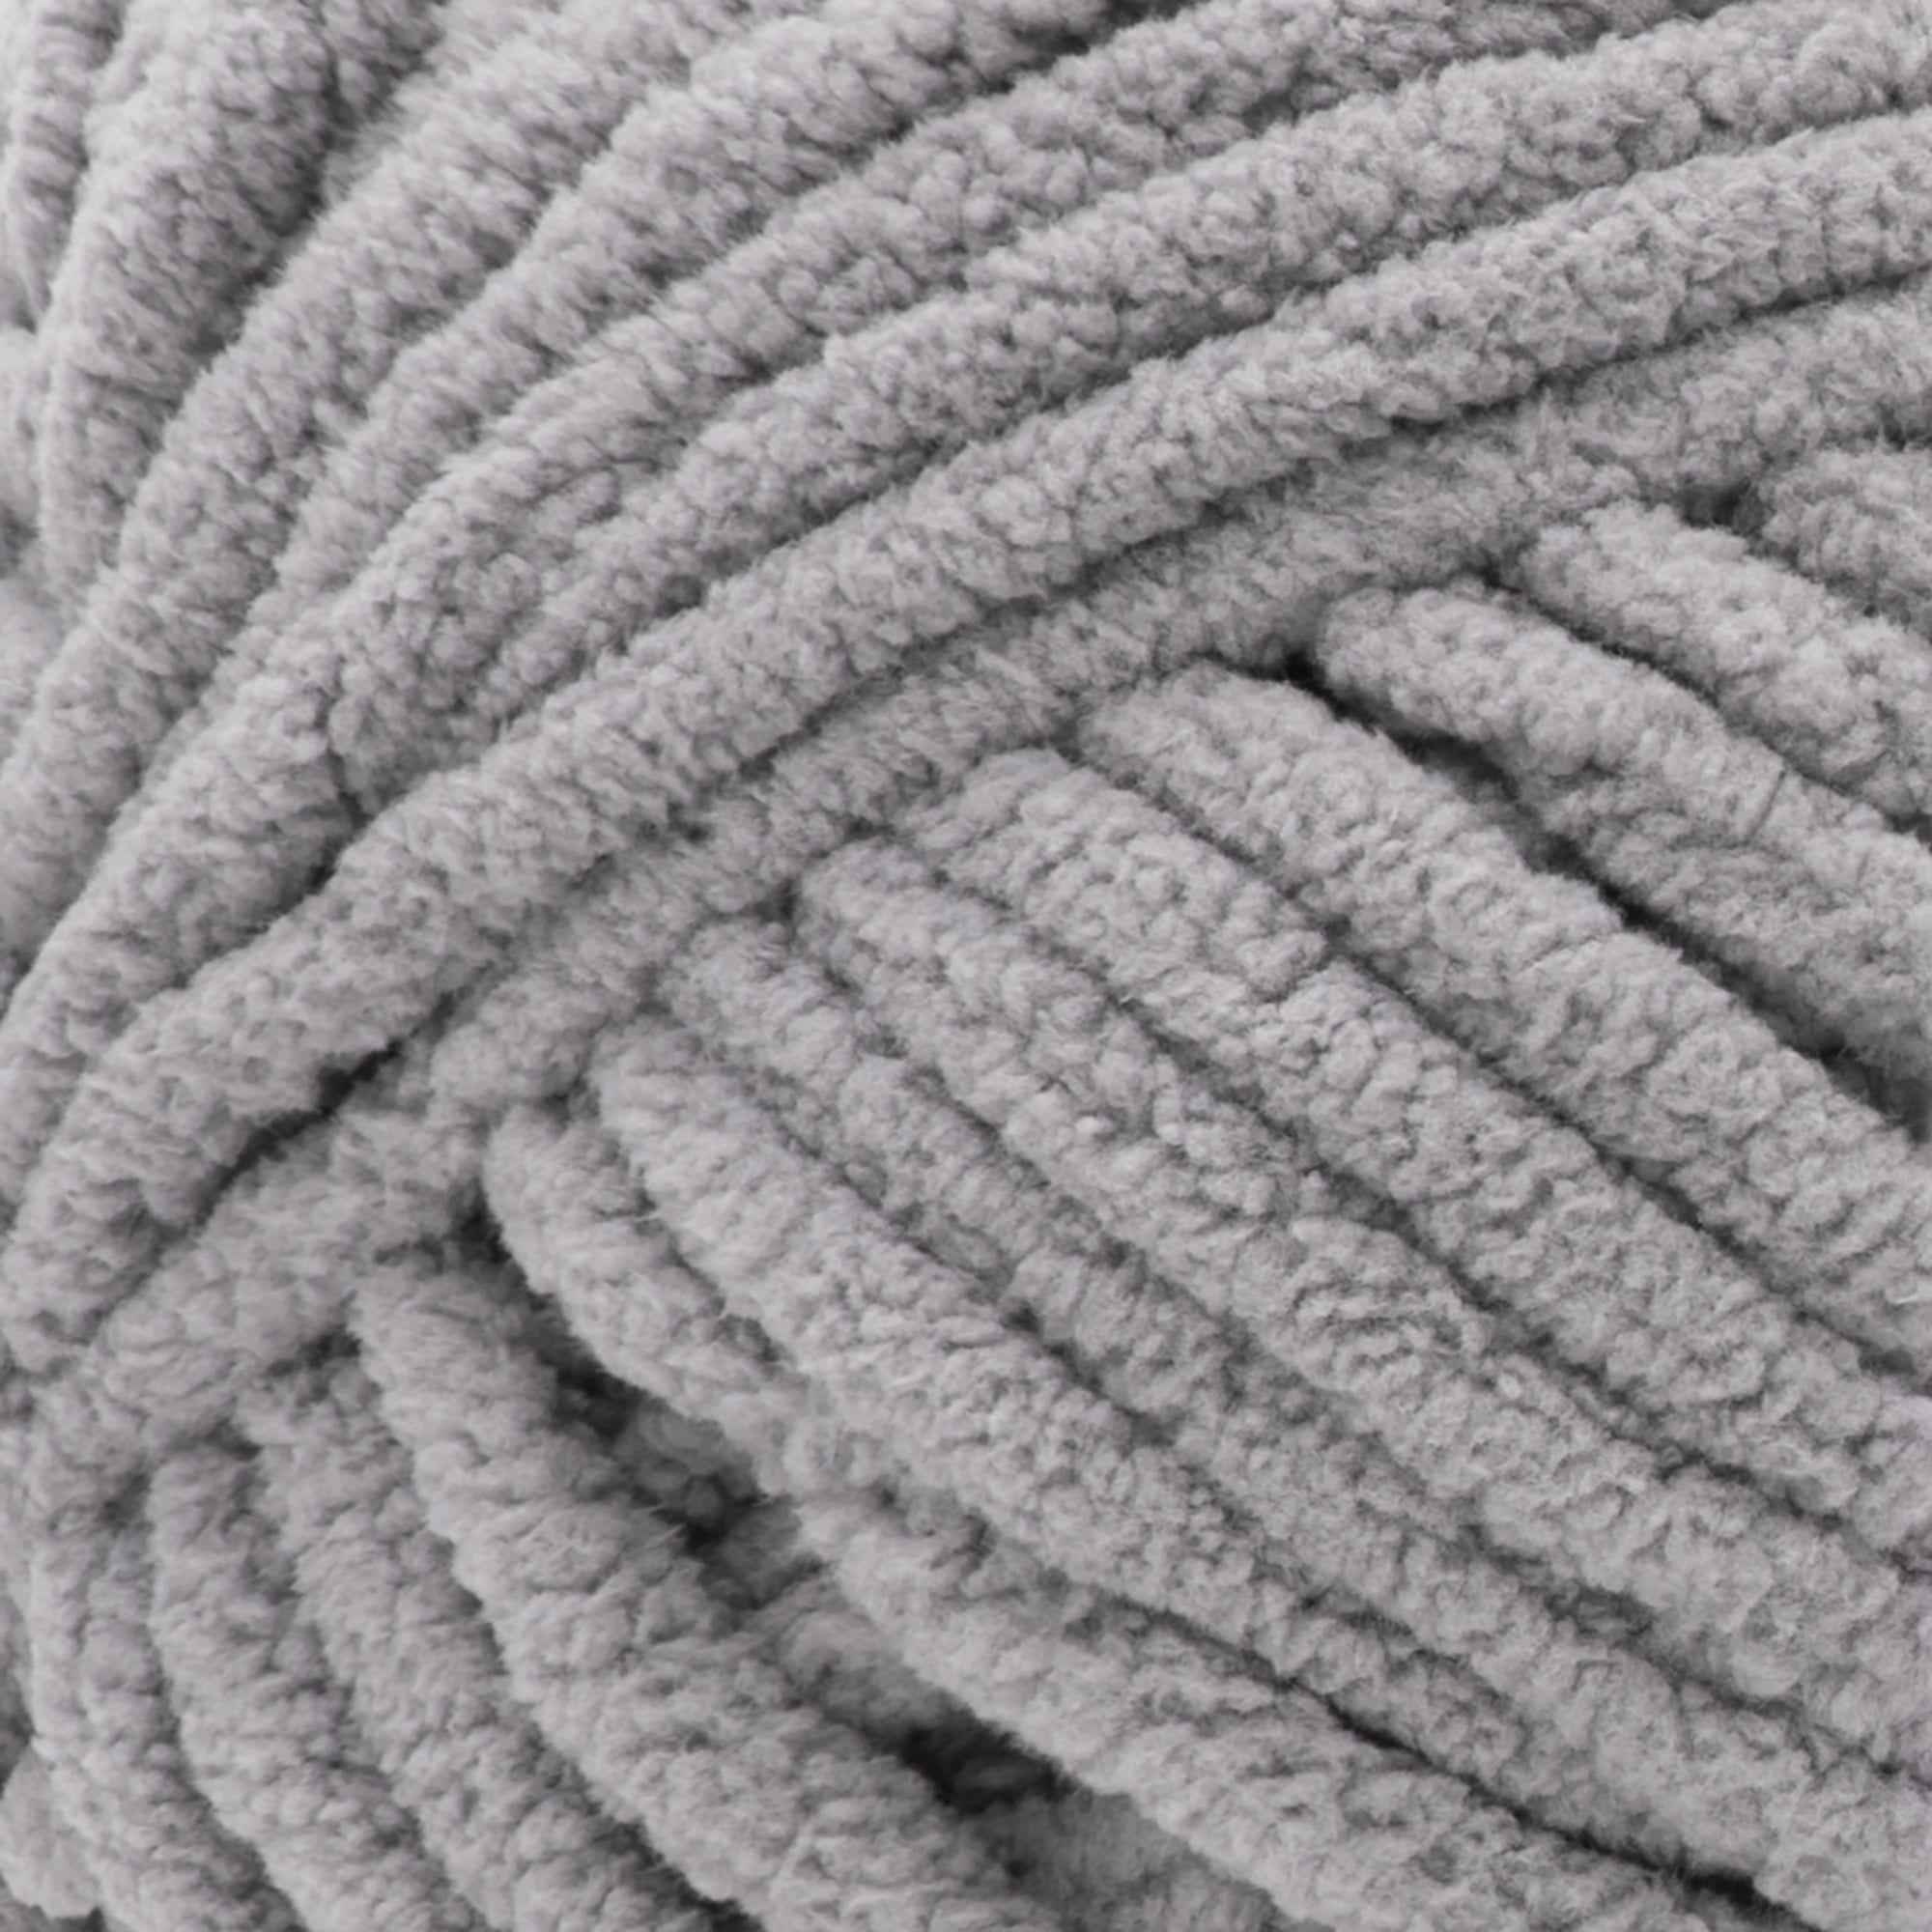  Bernat Blanket Perfect Phasing DEEP Black Cake Yarn - 2 Pack of  10.56oz/299.37g - 100% Polyester - #6 Super Bulky - 220 Yards for Knitting,  Crocheting, Crafts & Amigurumi, Chunky Chenille Yarn : Home & Kitchen